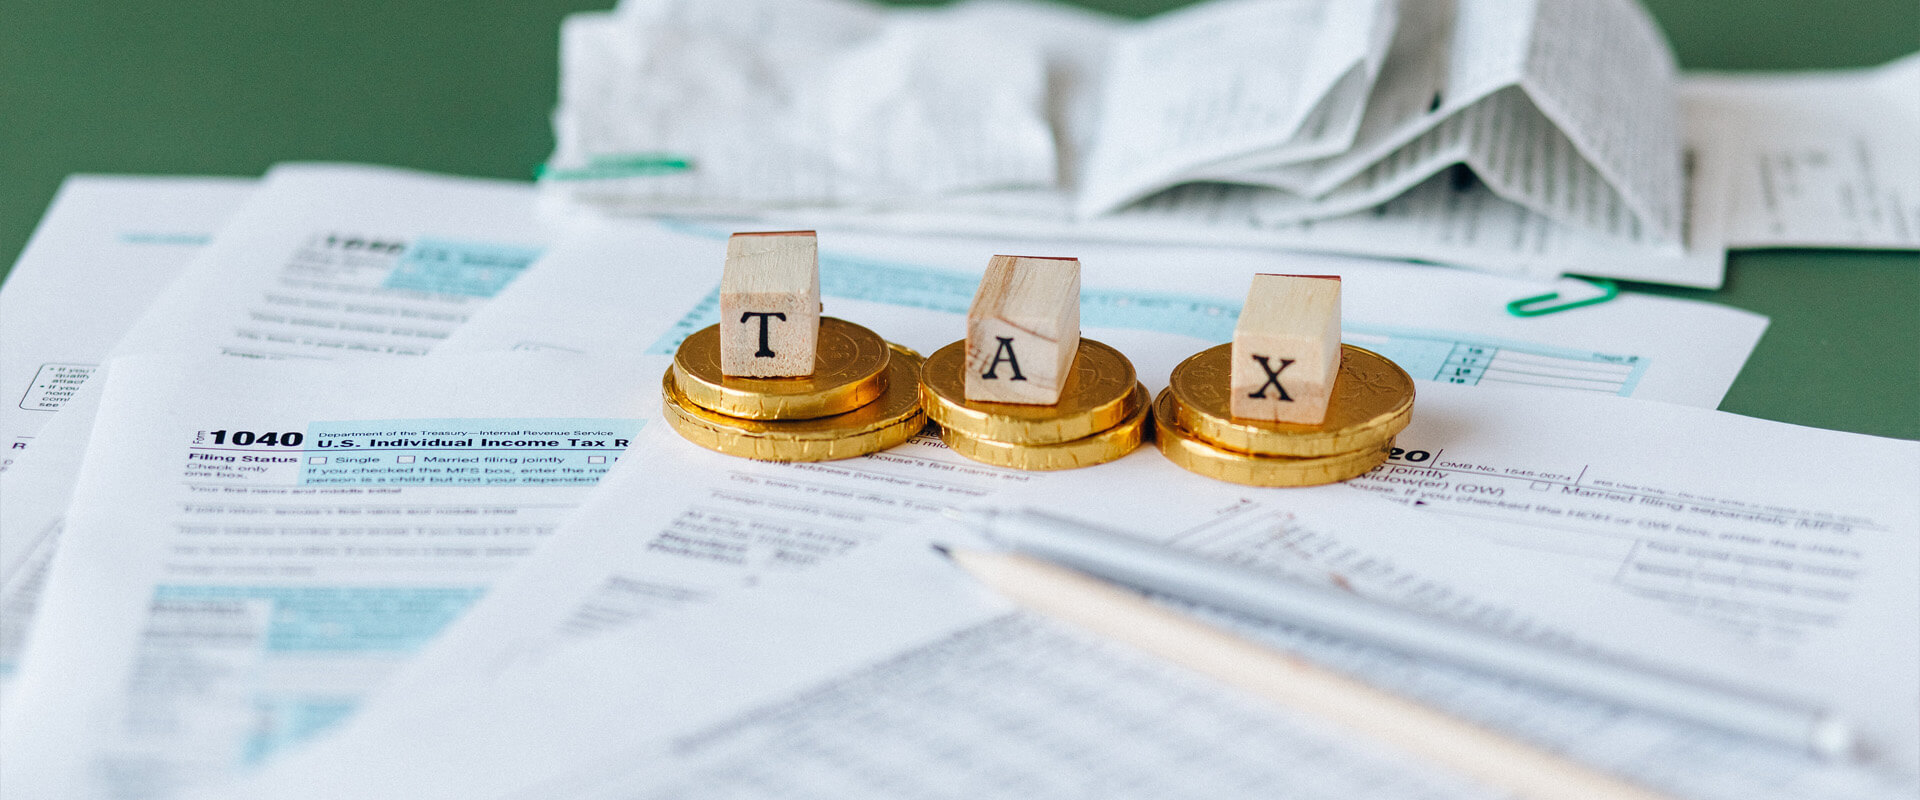 Xerxes Associates Provide Comprehensive Tax Services To U.S. Expats